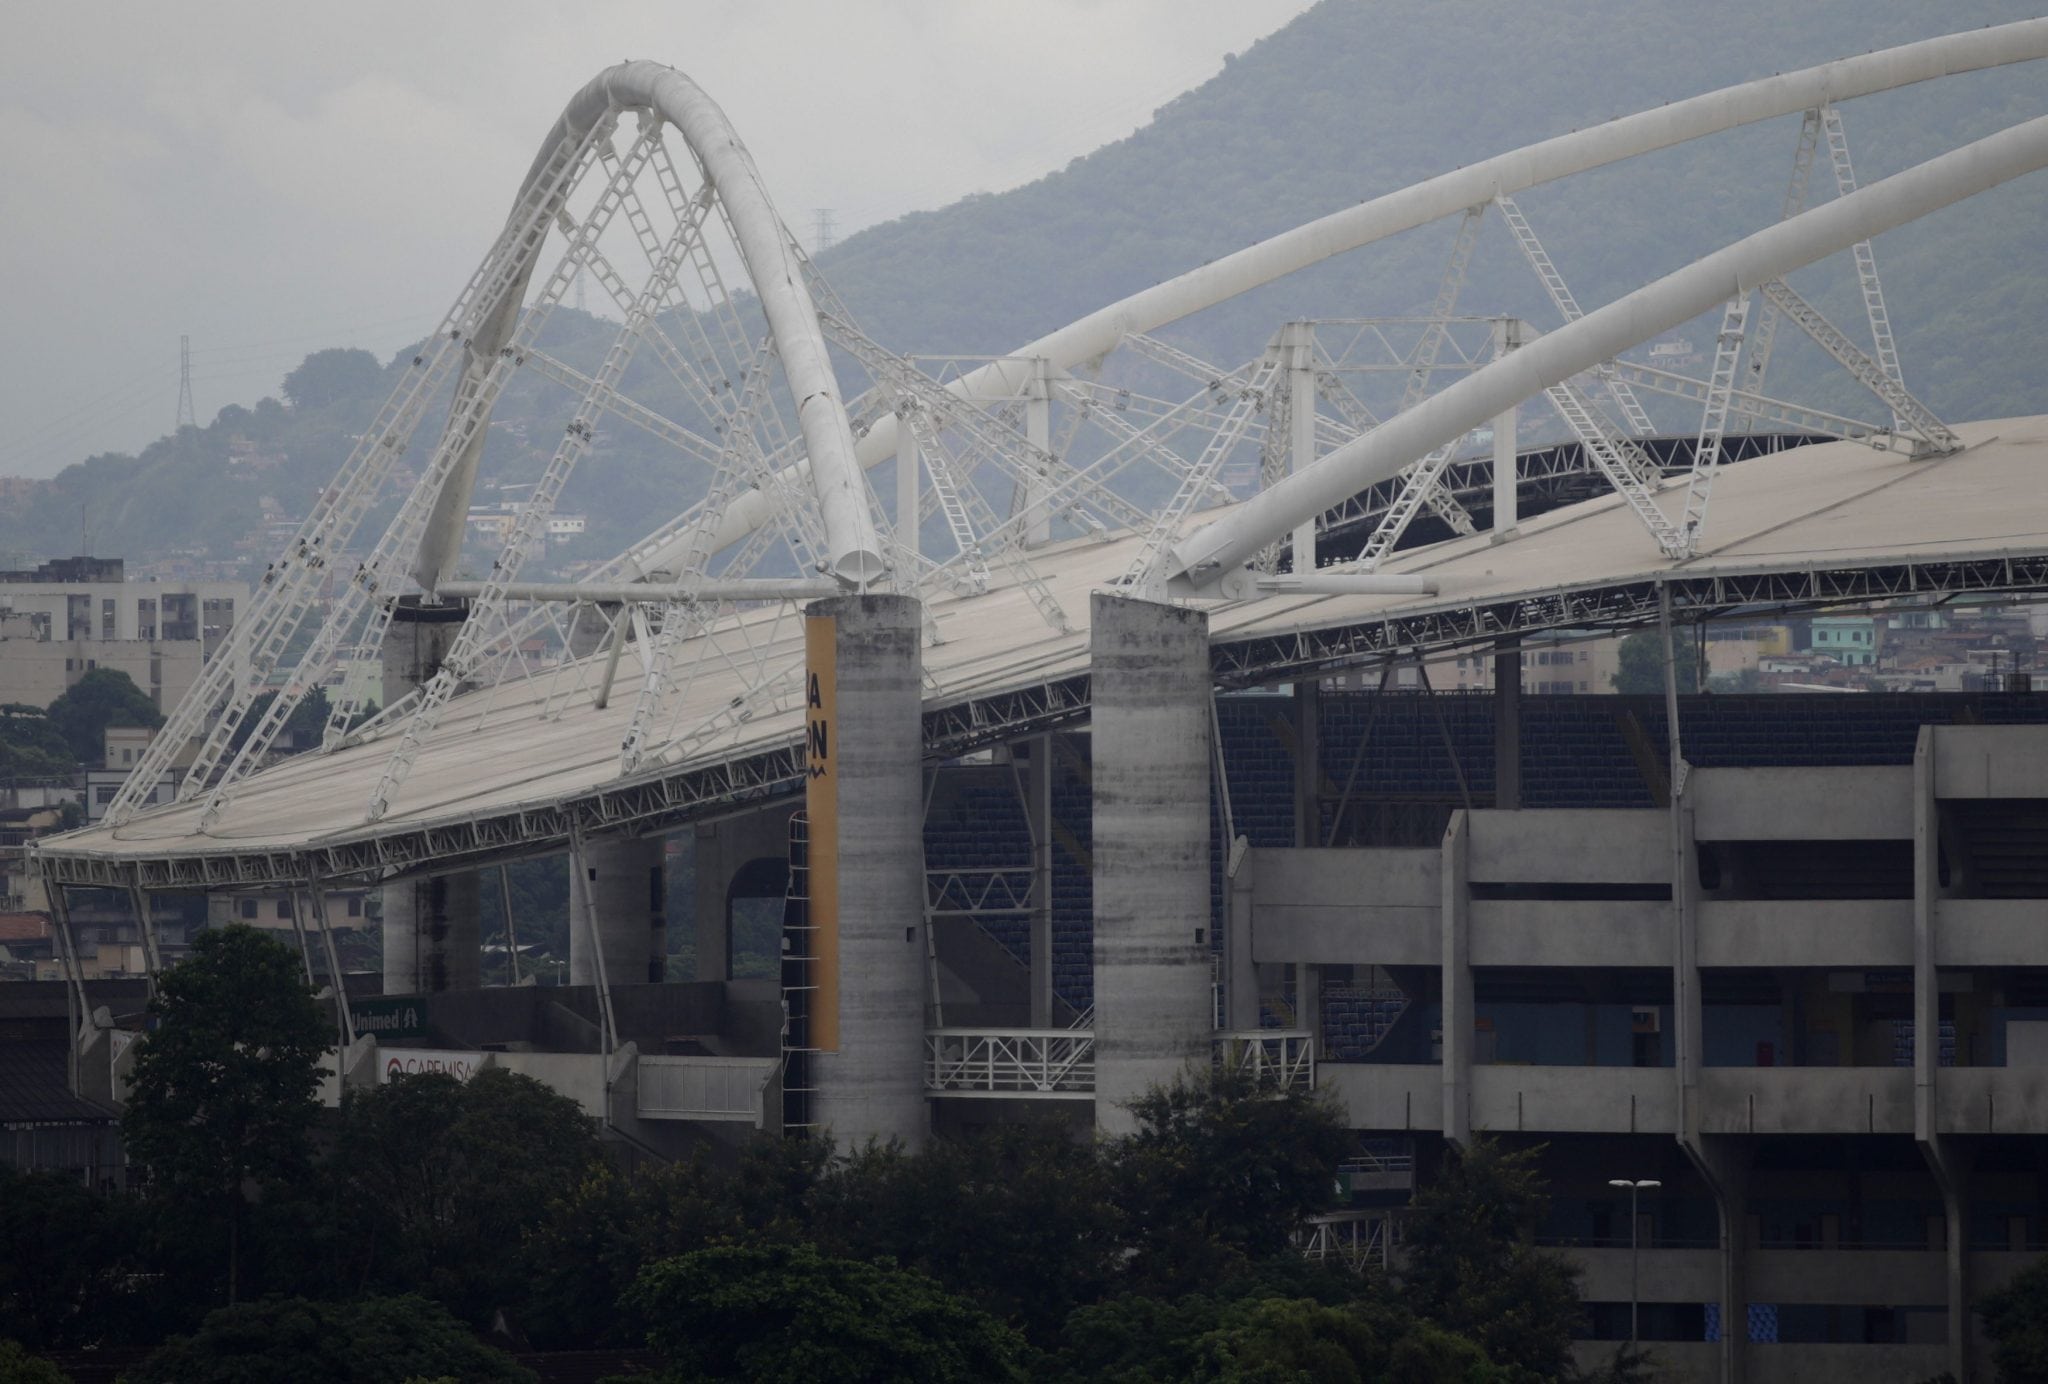 The Joao Havelange stadium is pictured in Rio de Janeiro. 